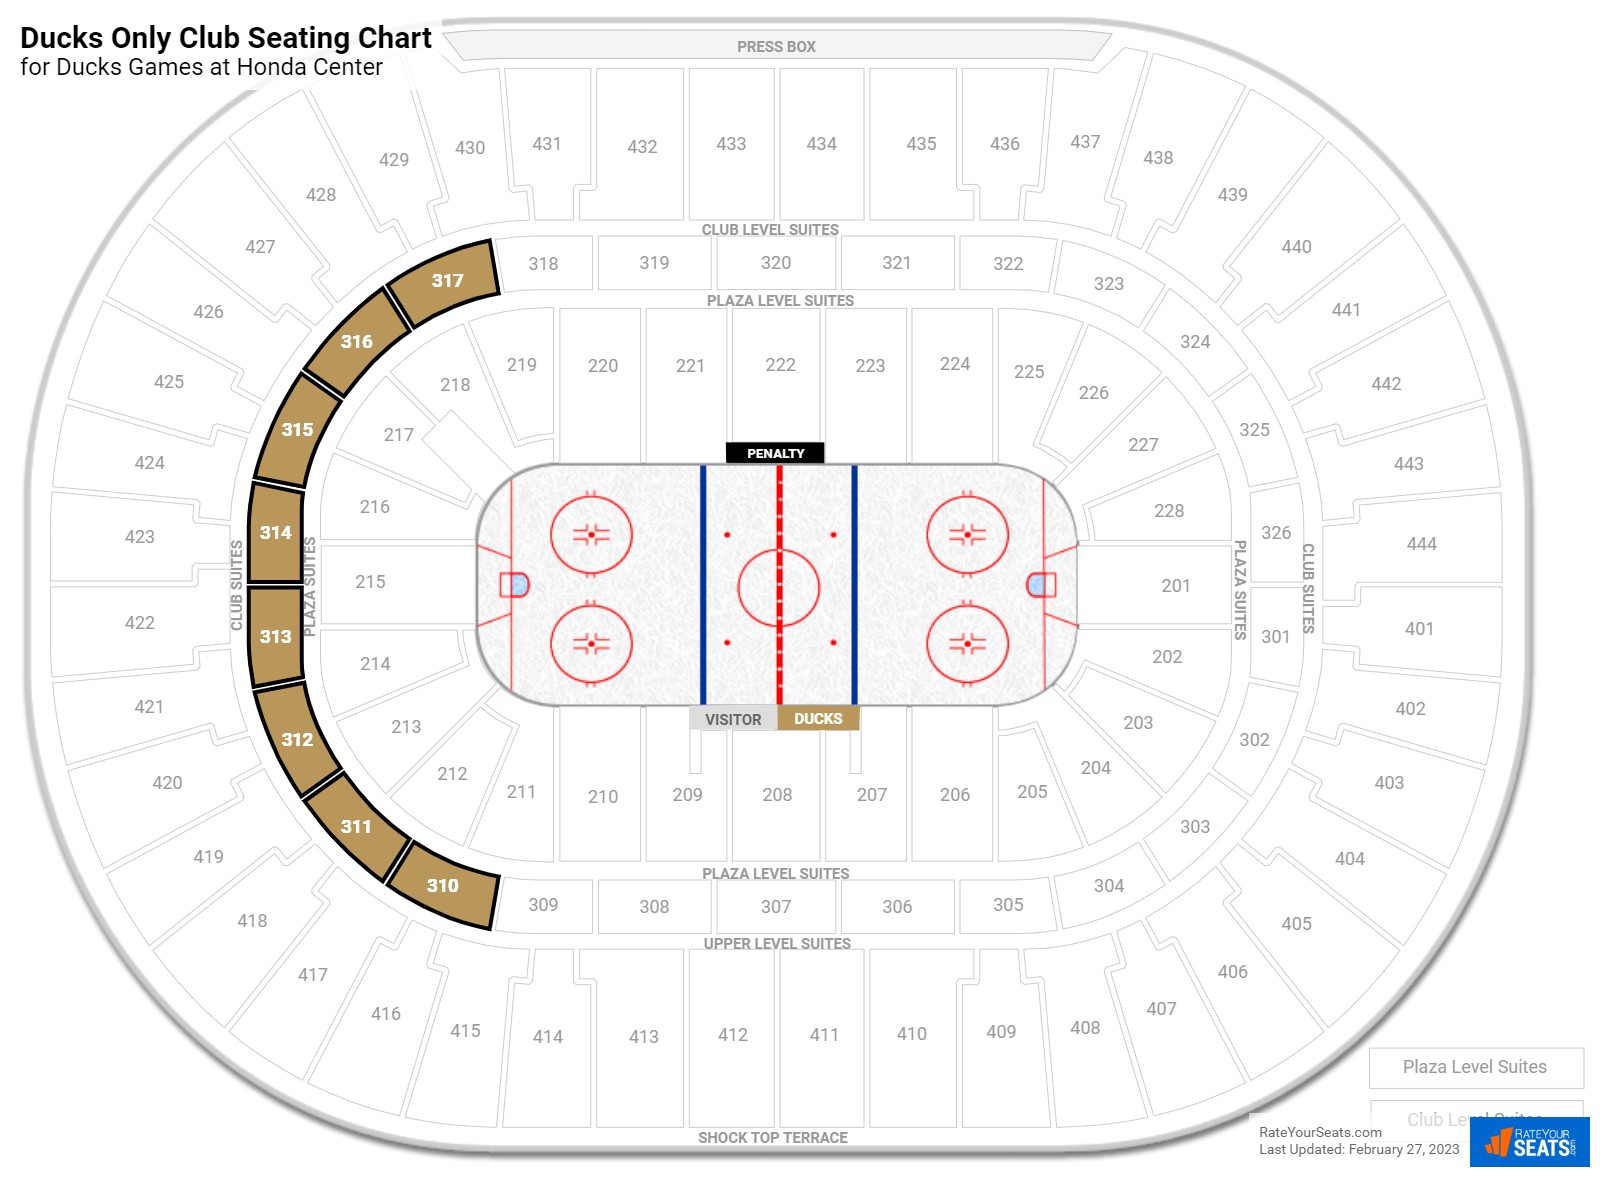 Ducks Ducks Only Club Seating Chart at Honda Center